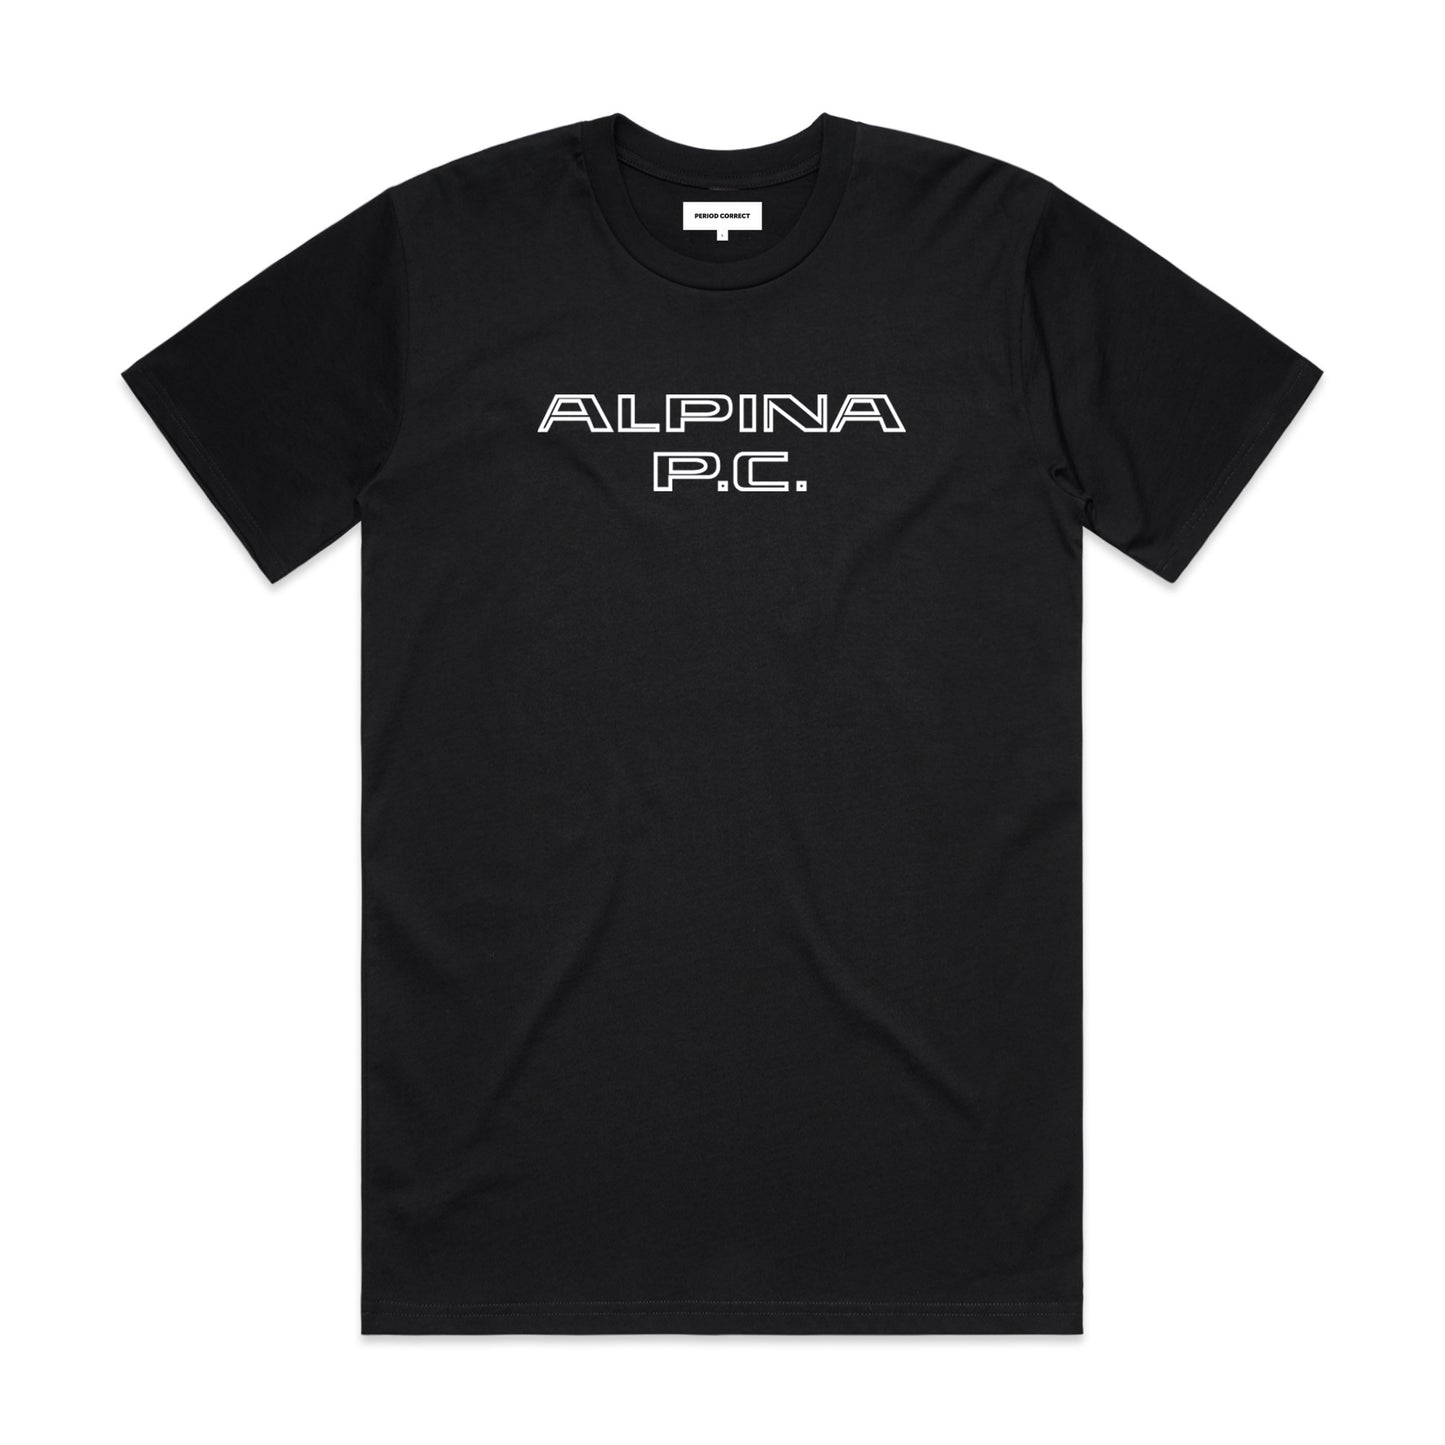 ALPINA P.C. T-SHIRT BLACK